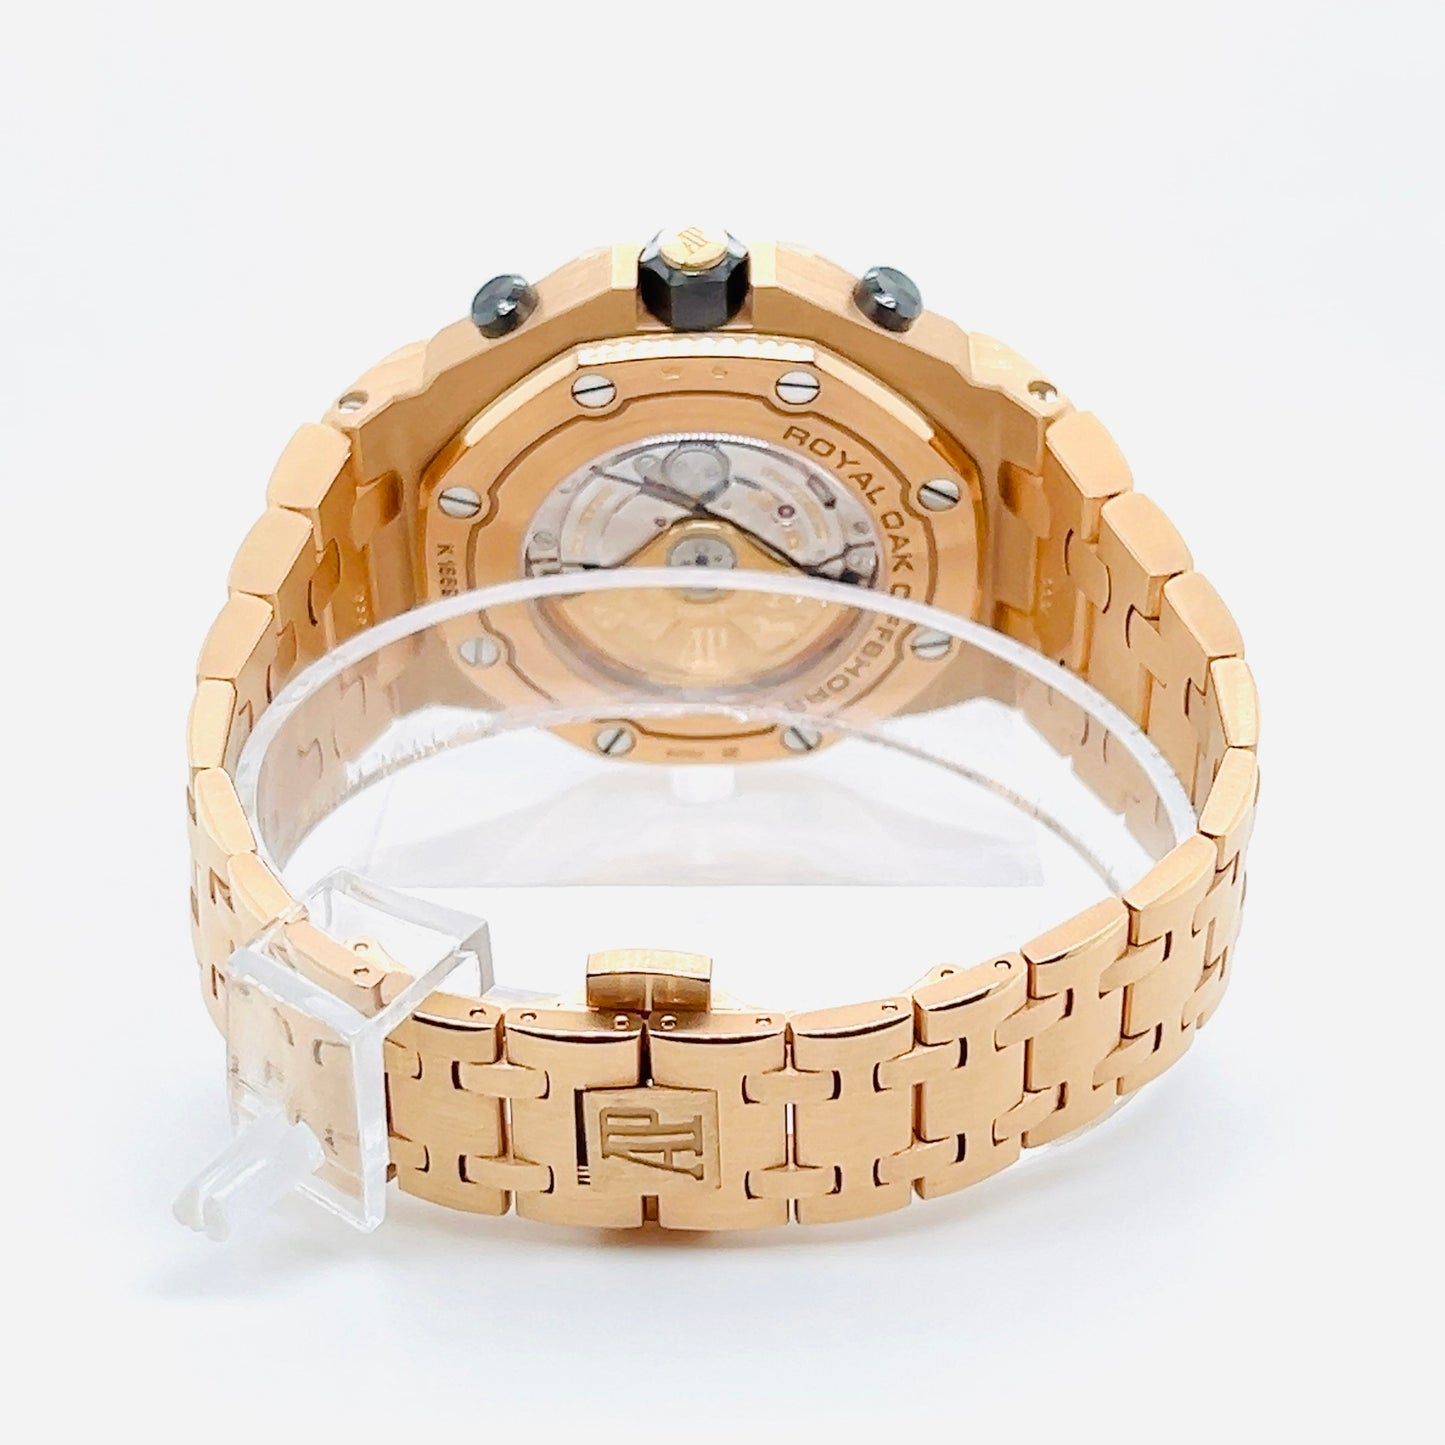 Audemars Piguet Royal Oak Offshore Selfwinding Chronograph Watch Model #26470OR.OO.1000OR.02